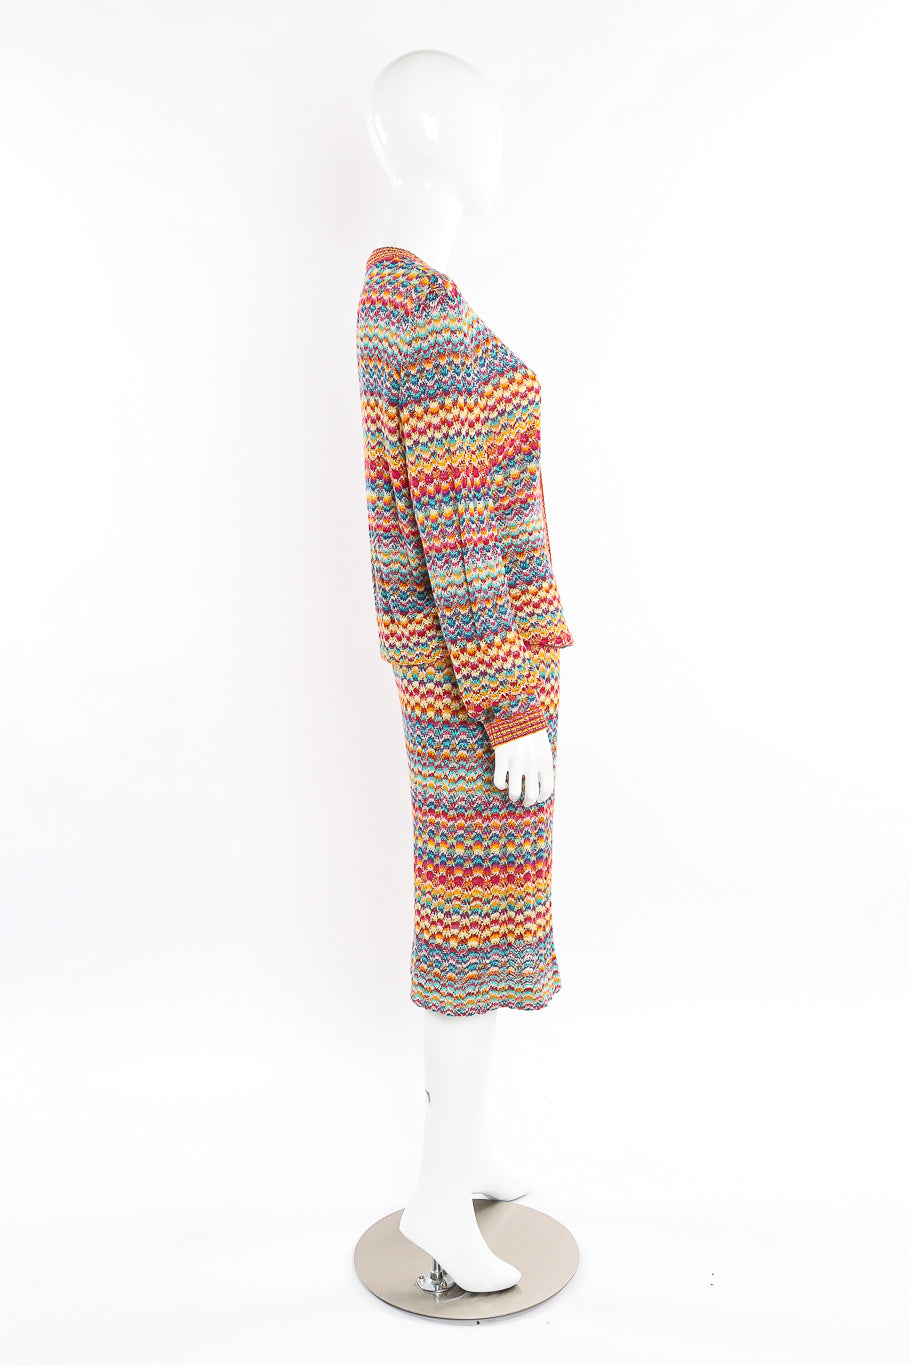 Scallop stripe classic knit 2 piece set by Missoni mannequin side view @recessla